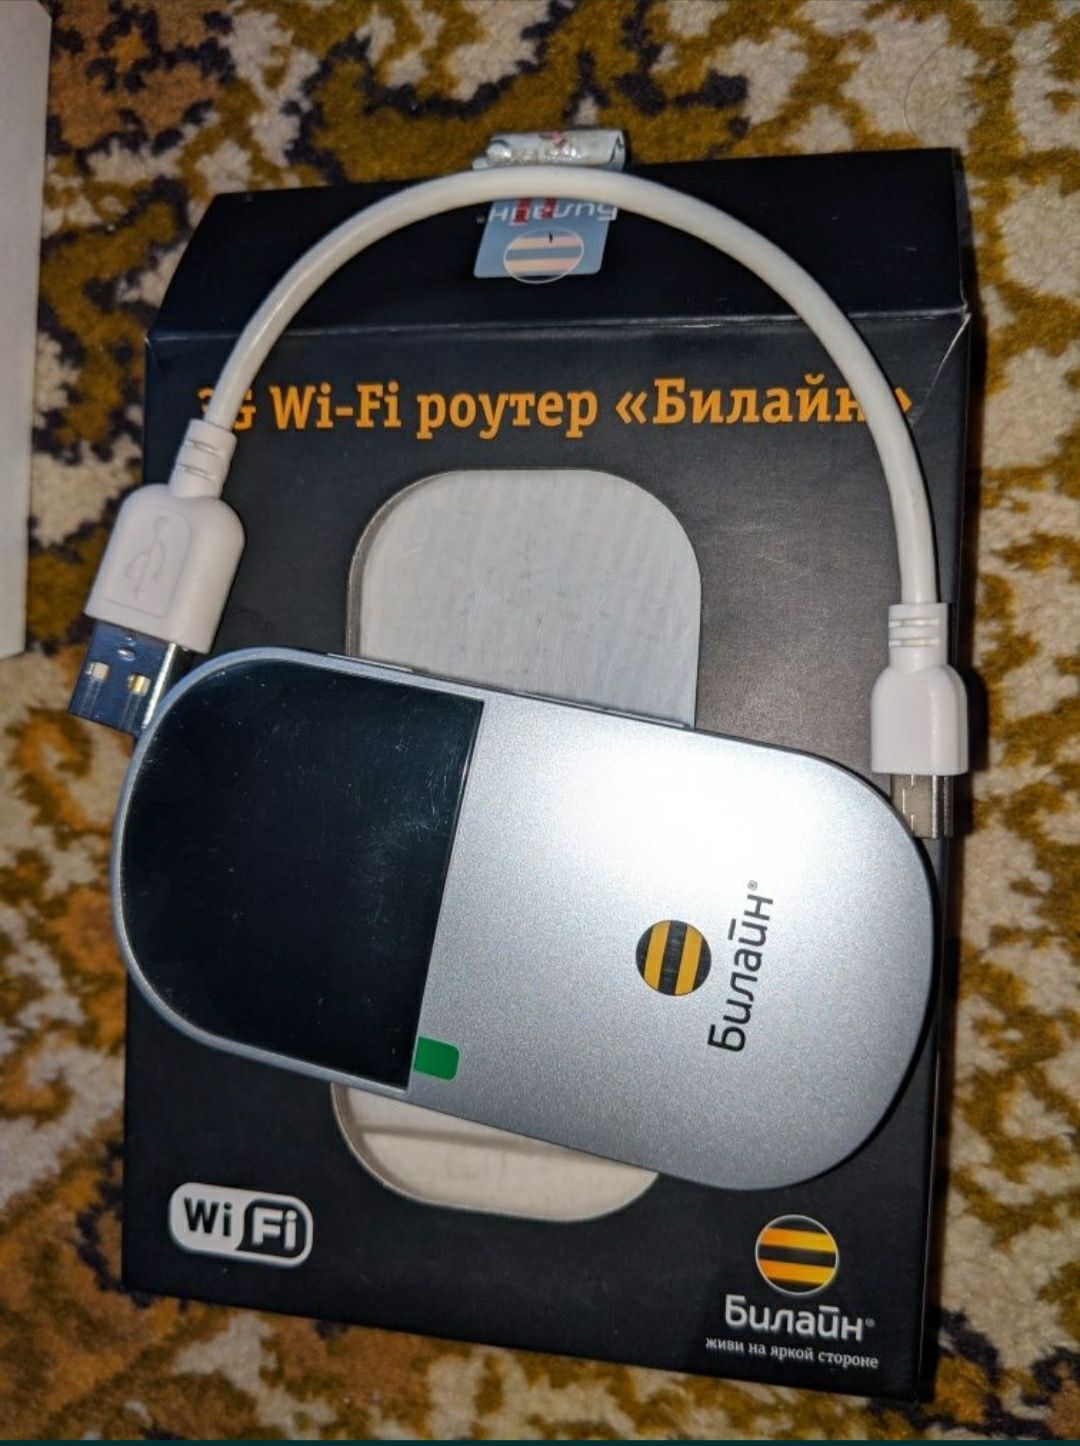 3G WI-FI Роутер (Абсолютно новый)